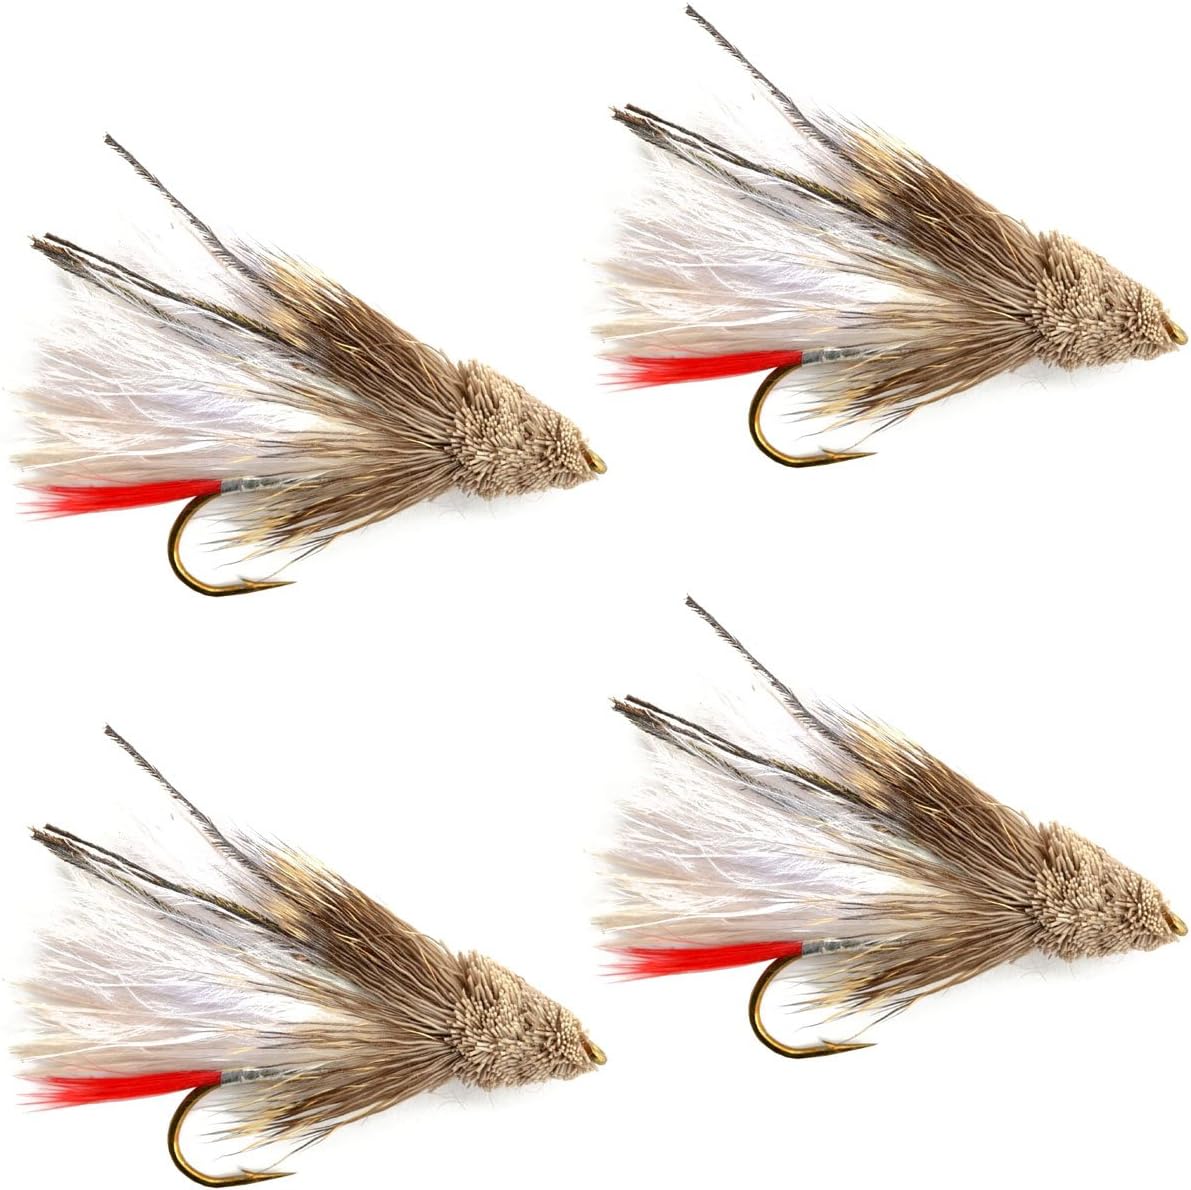 White Marabou Muddler Minnow Streamer Flies - 4 Fly Fishing Flies - Hook Size 8